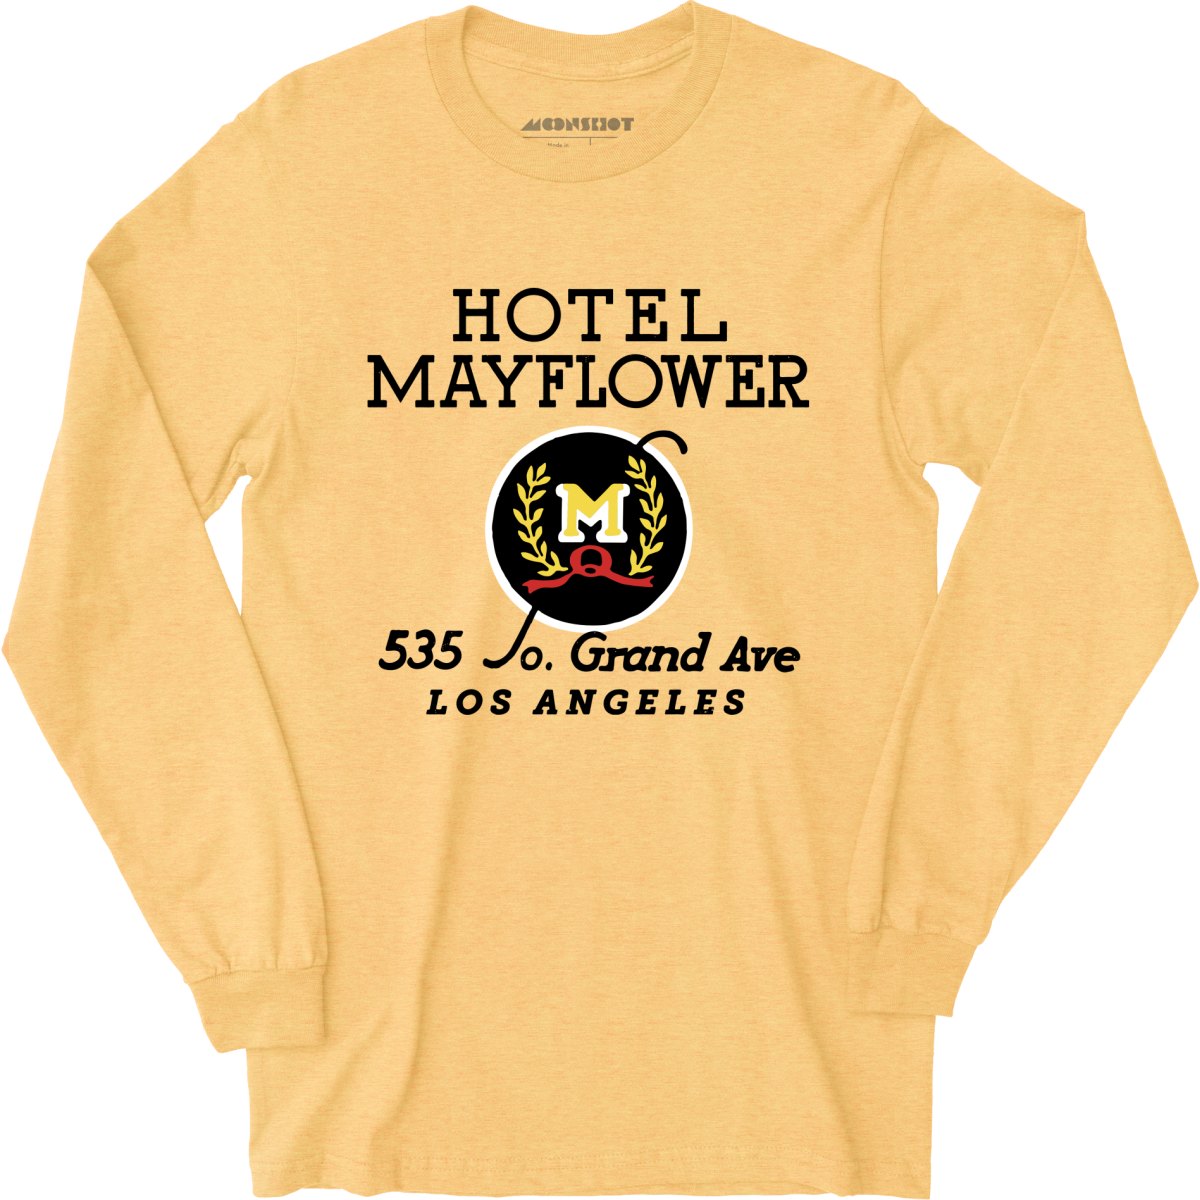 Hotel Mayflower - Los Angeles, CA - Vintage Hotel - Long Sleeve T-Shirt